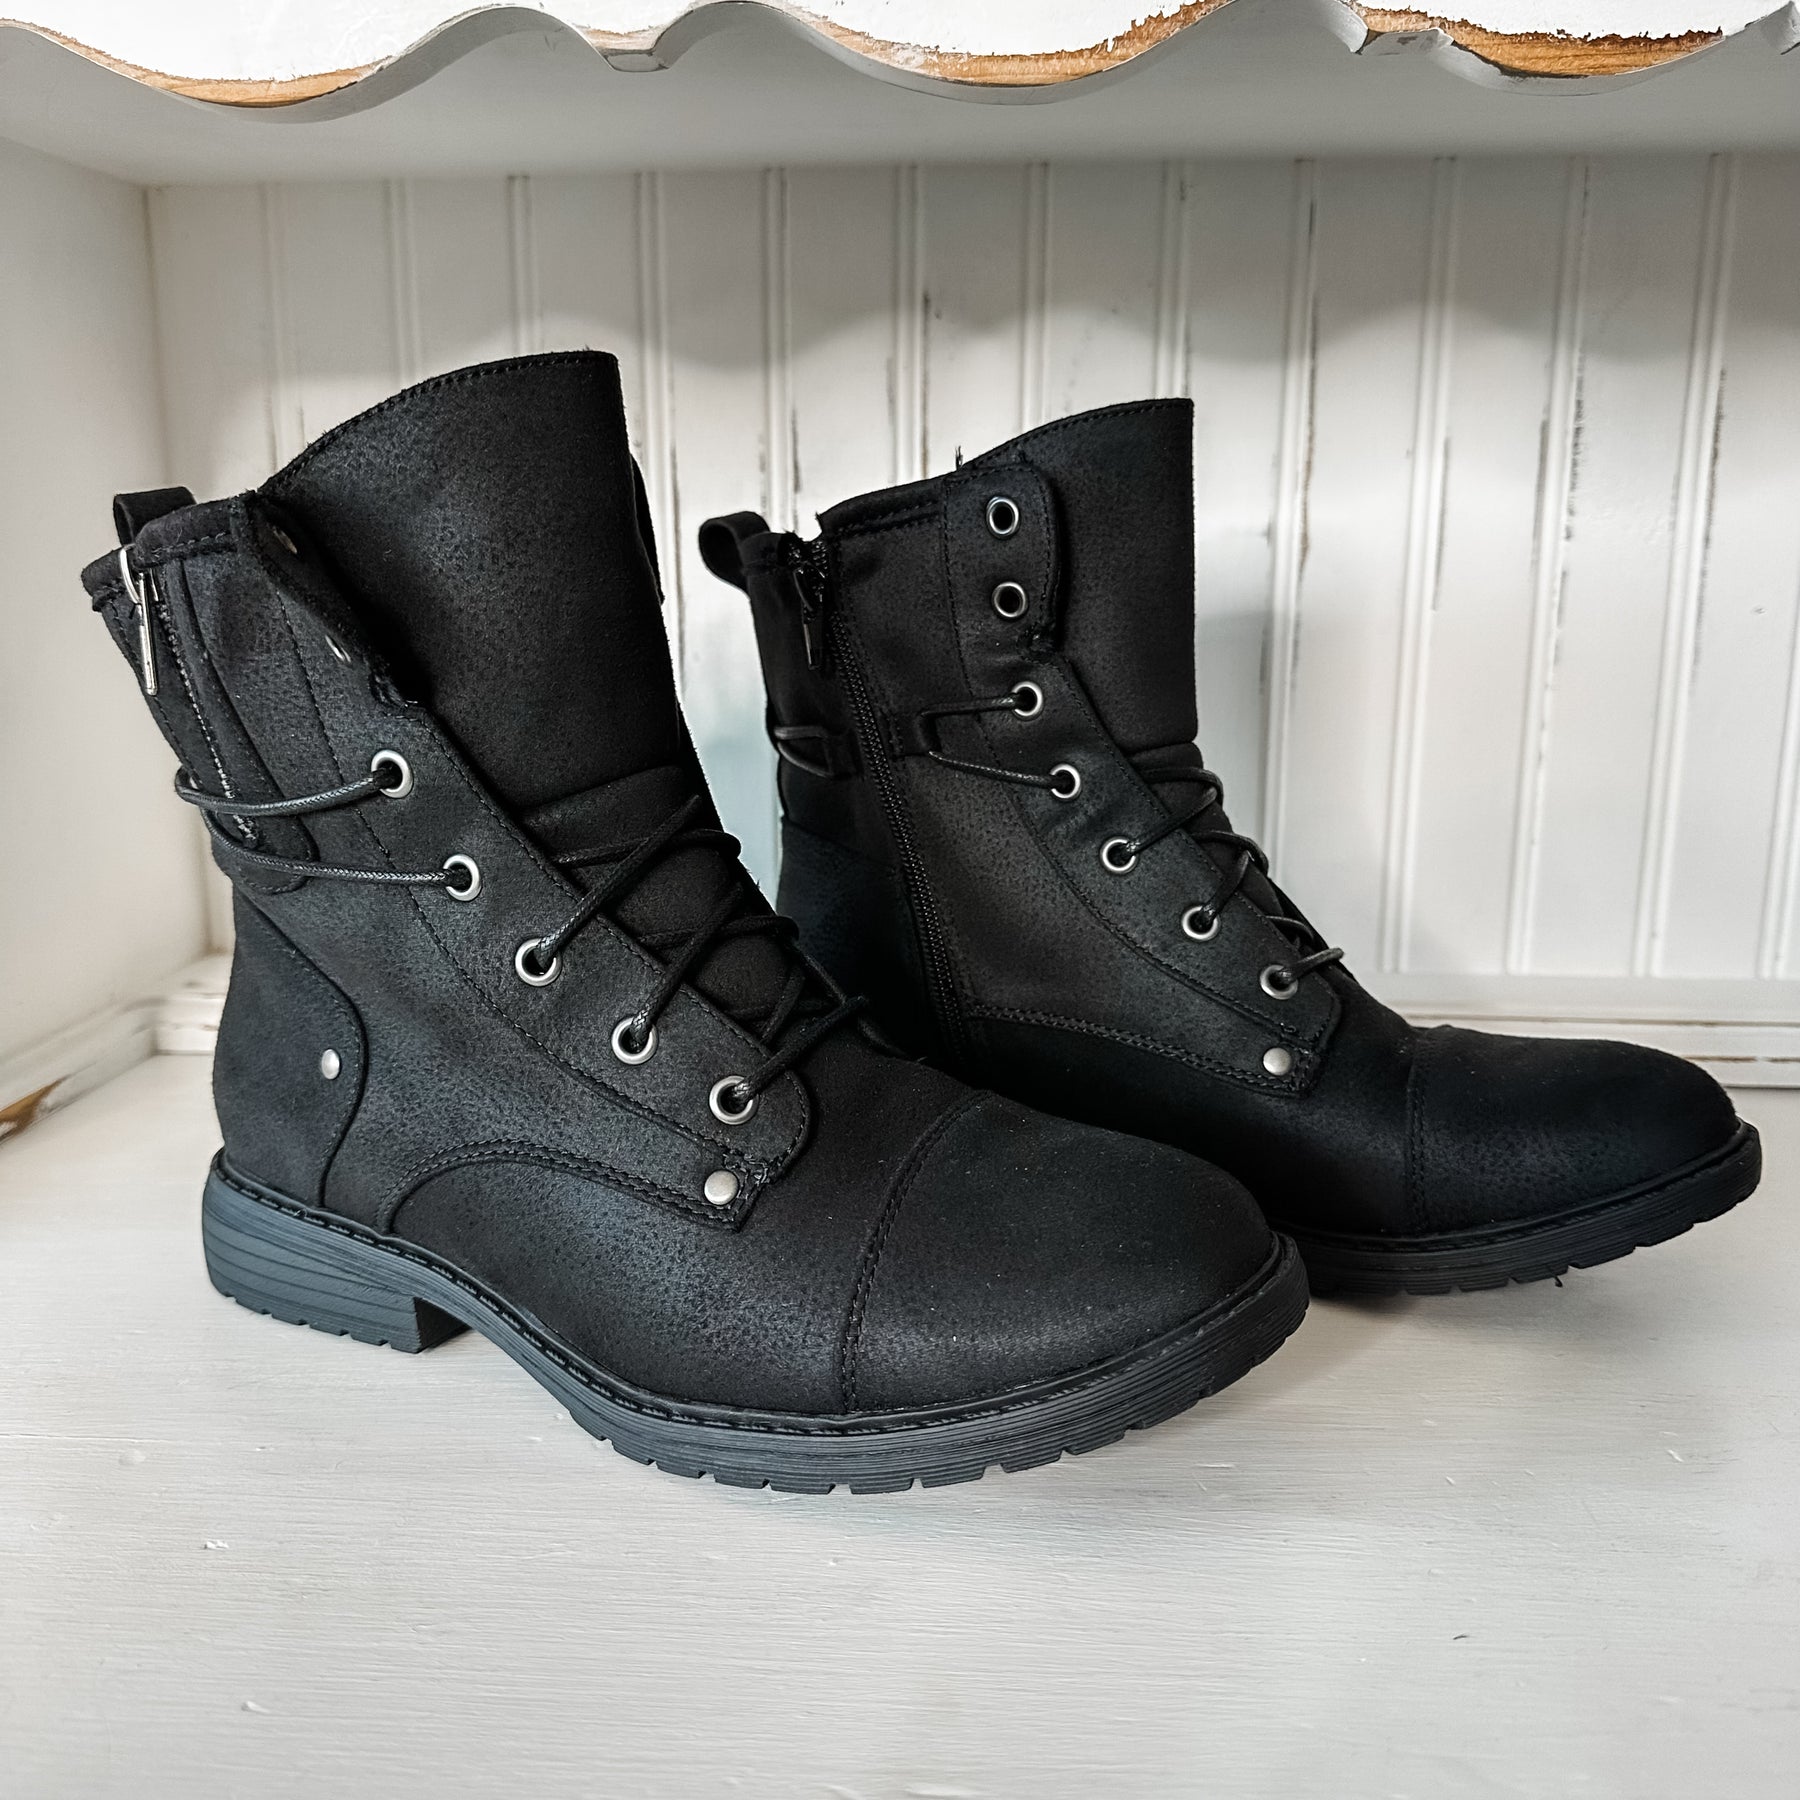 Kenia Boots - Black